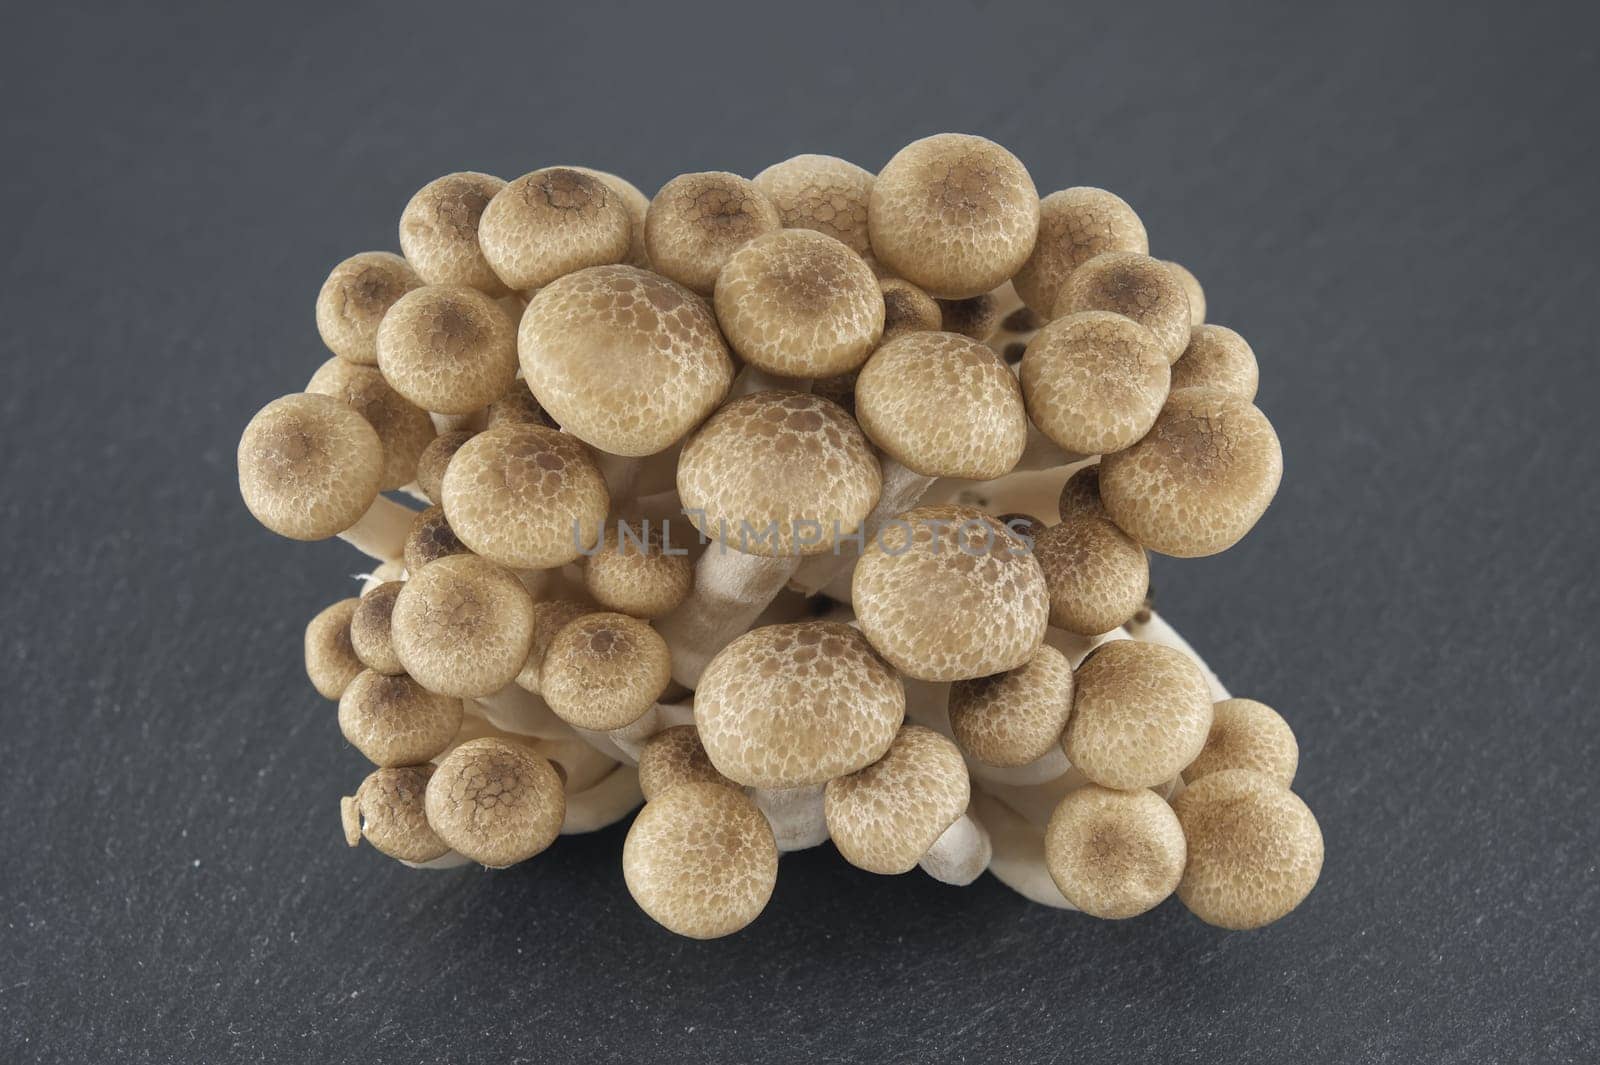 Brown beech mushrooms arranged on black stone plate by NetPix